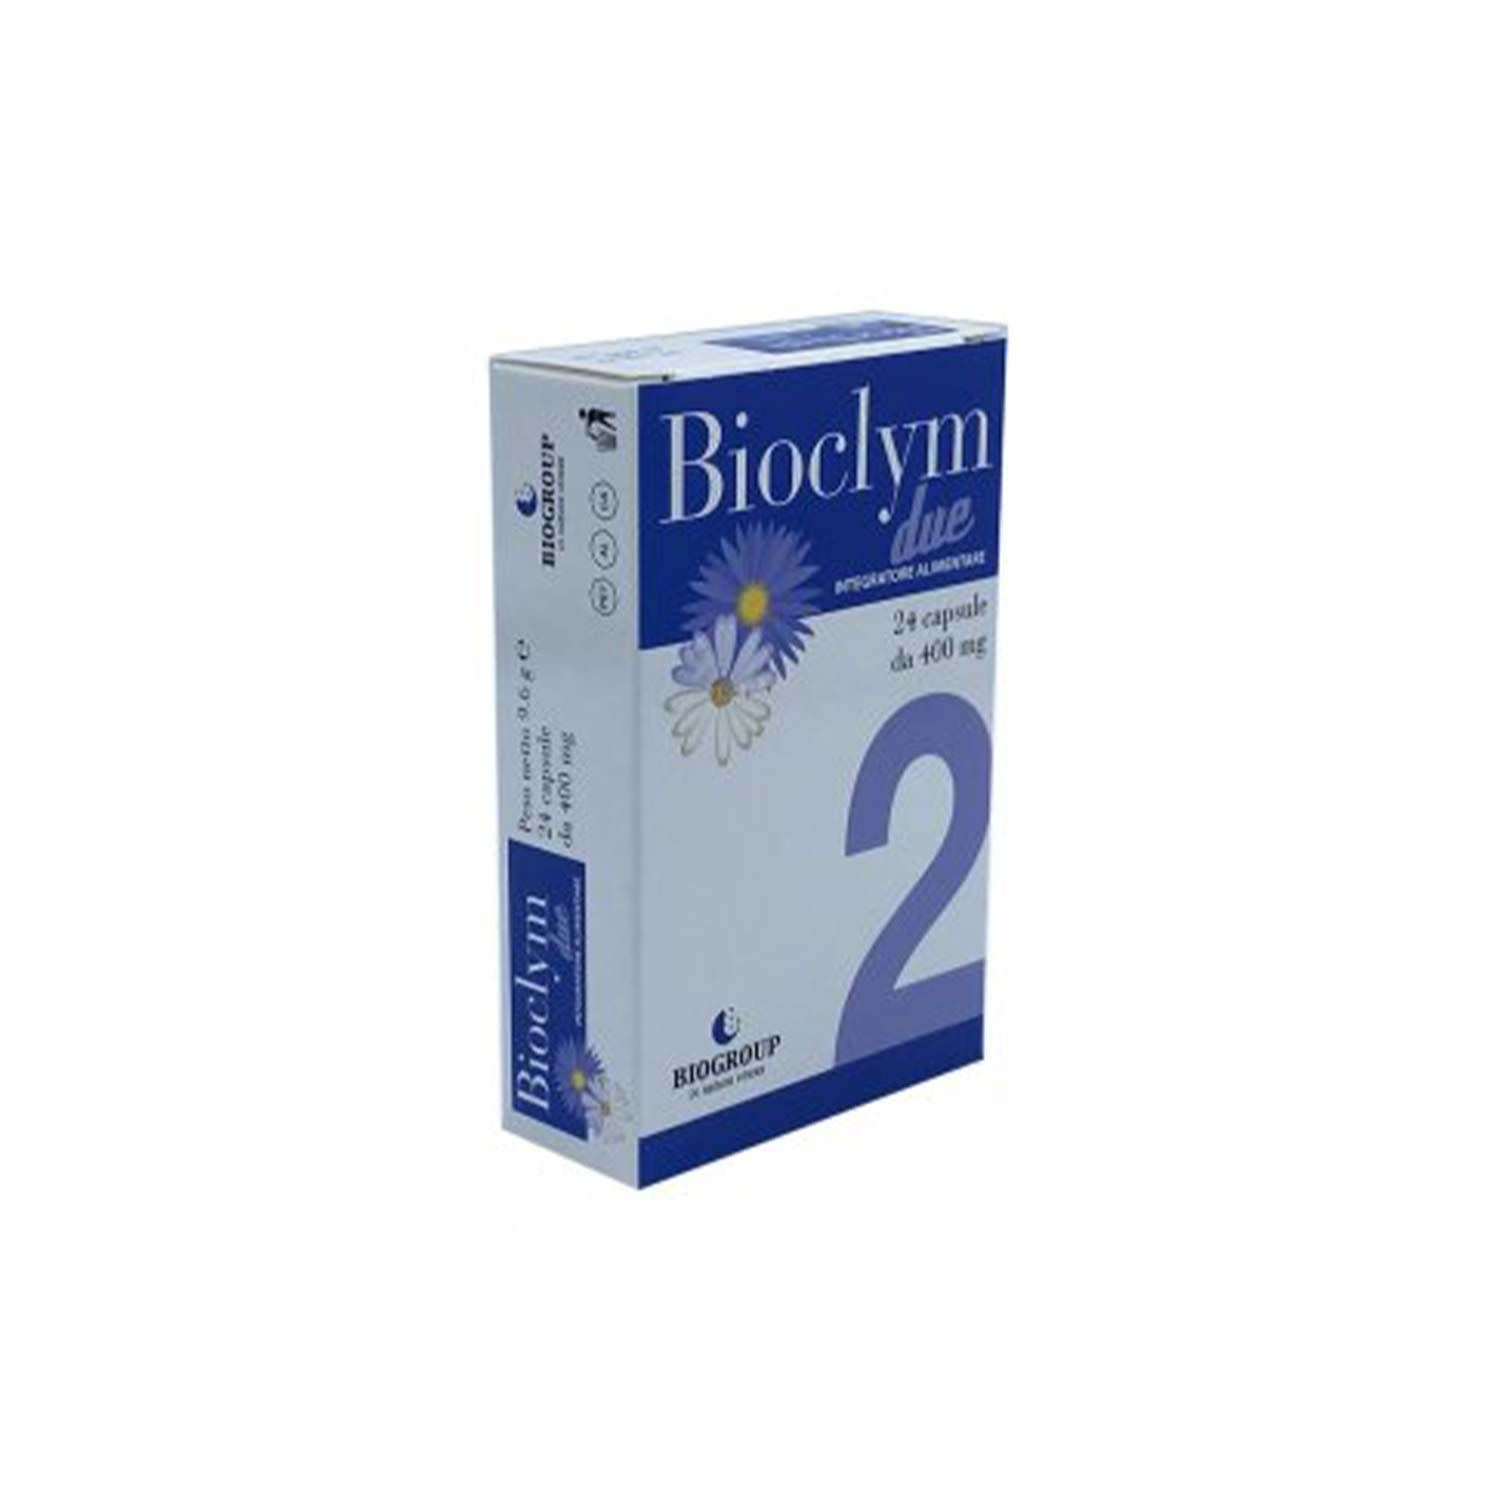 905943496 - Bioclym Due Integratore menopausa 24 capsule - 4715022_3.jpg